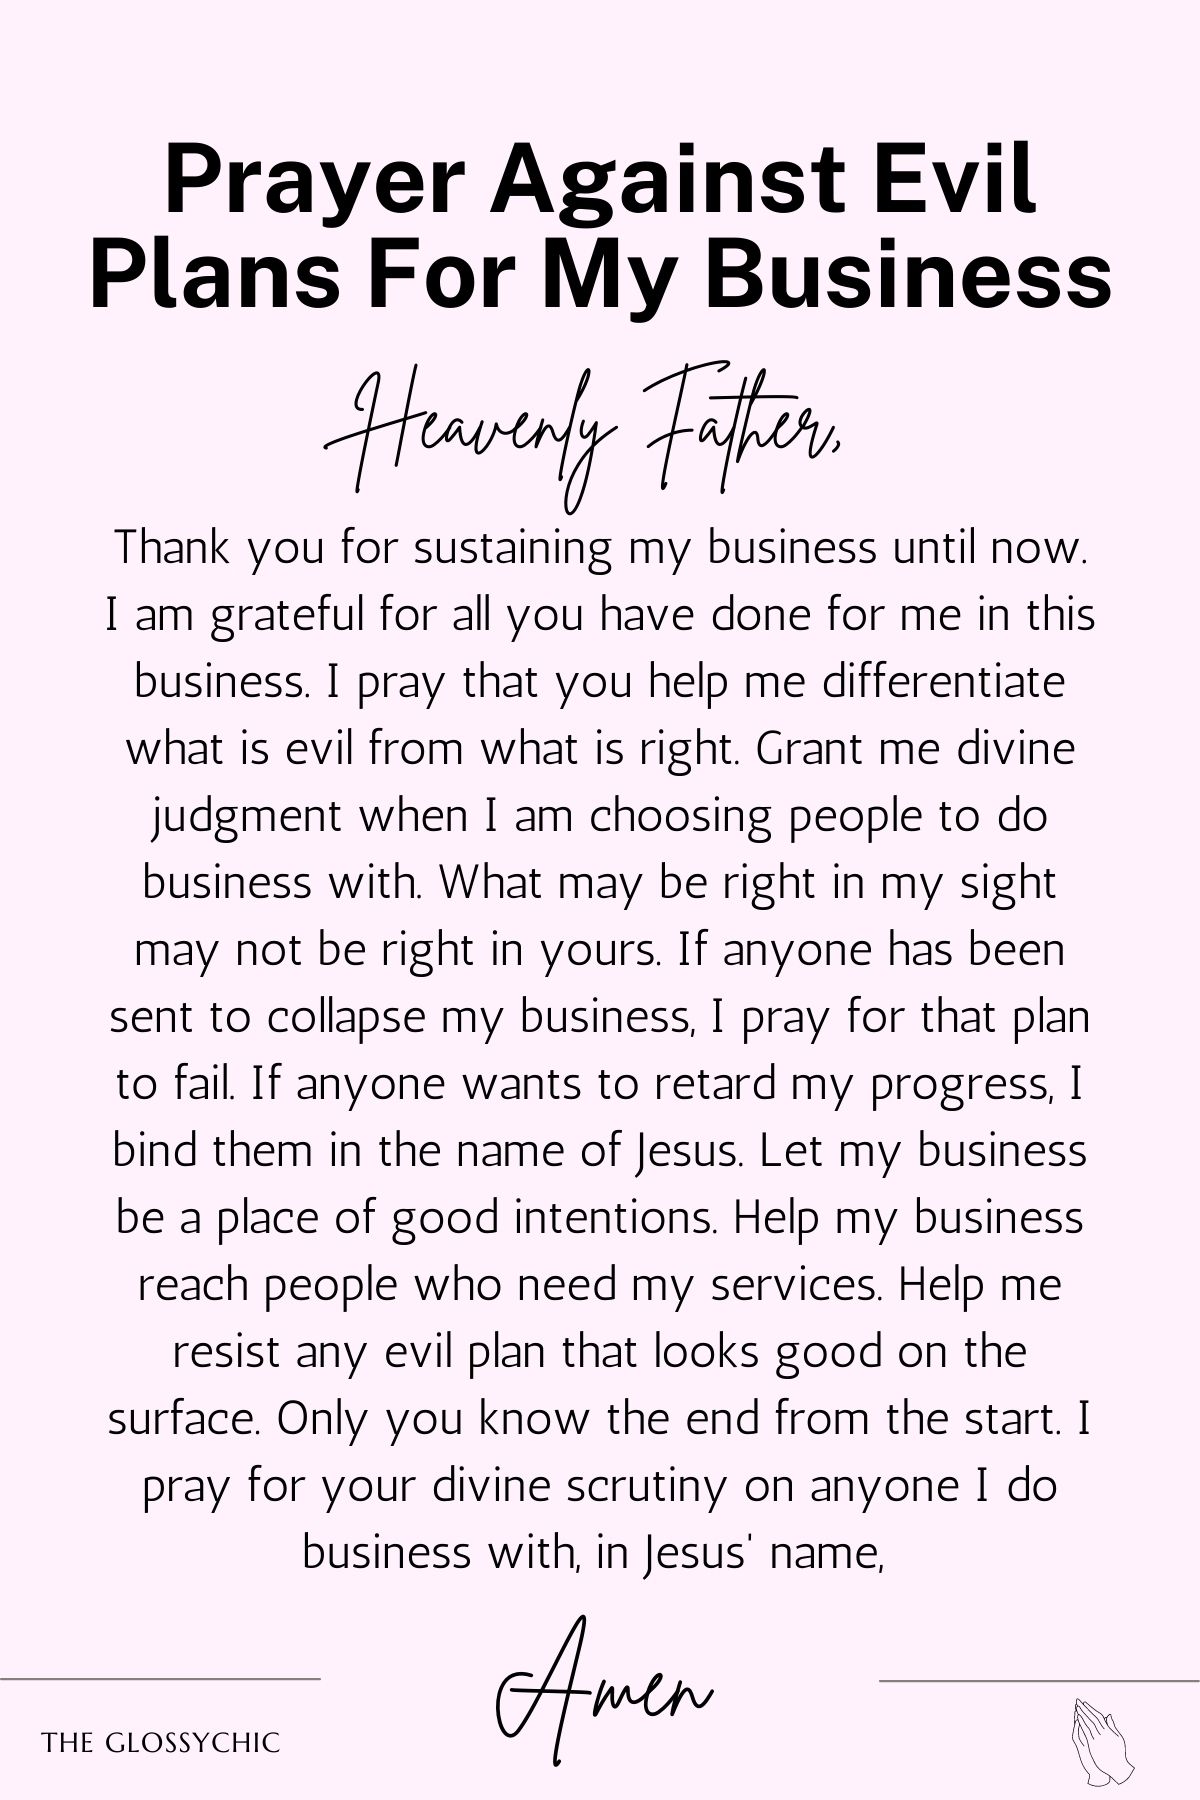 Prayer against evil plans for my business - business prayer points